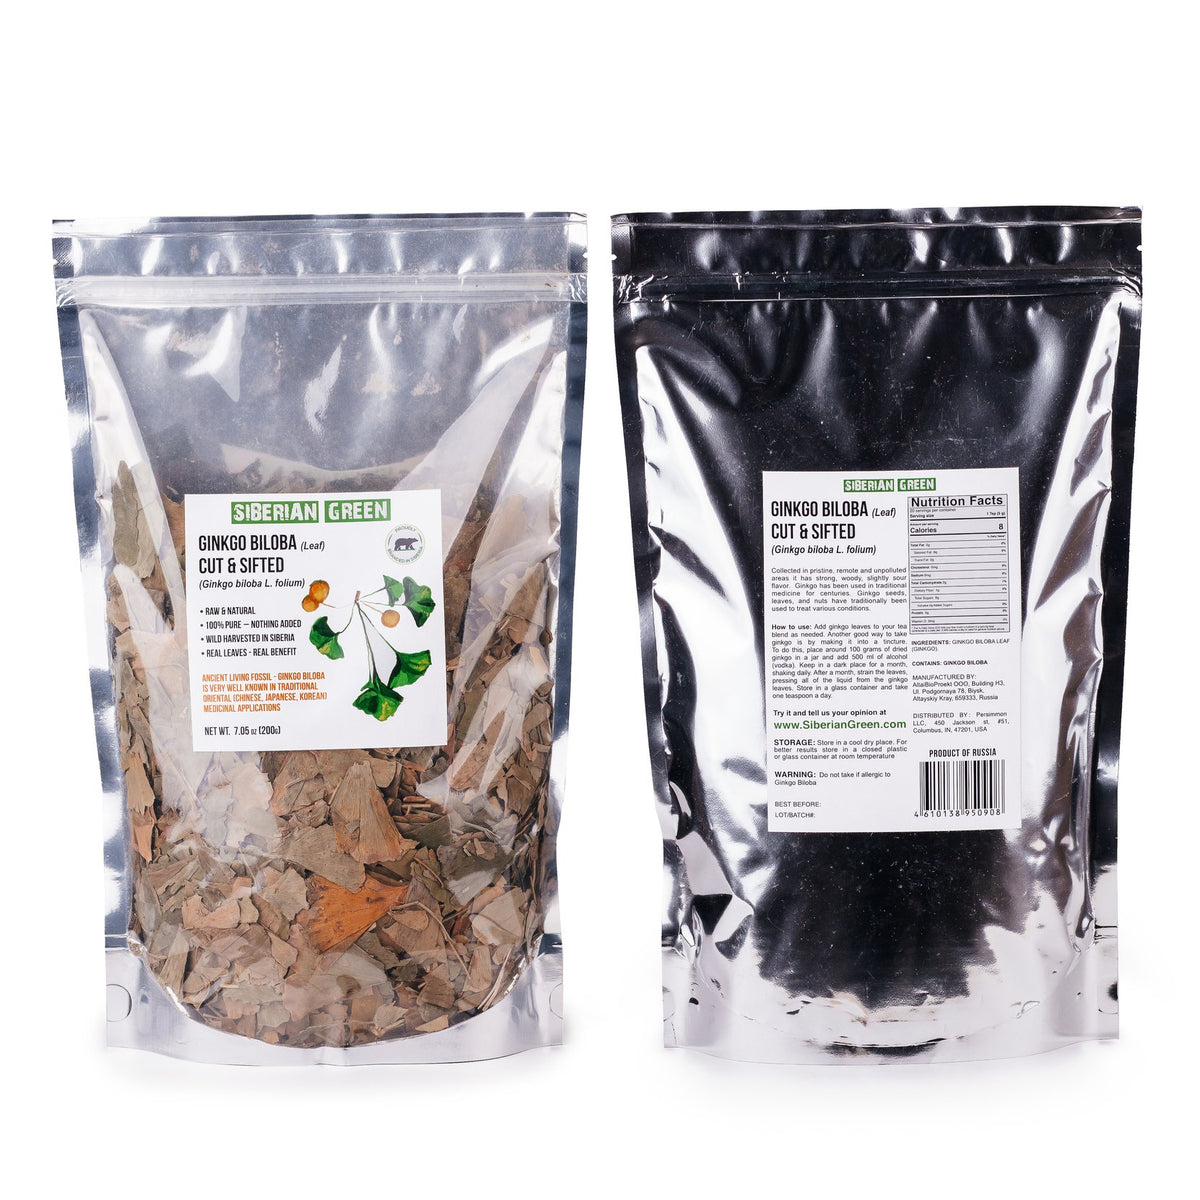 Siberian Green Ginkgo Biloba Cut and Sifted Leaf 200g (7.06 oz) – 100% Premium Loose Biloba Tea Pure Healthy Wild Harvest